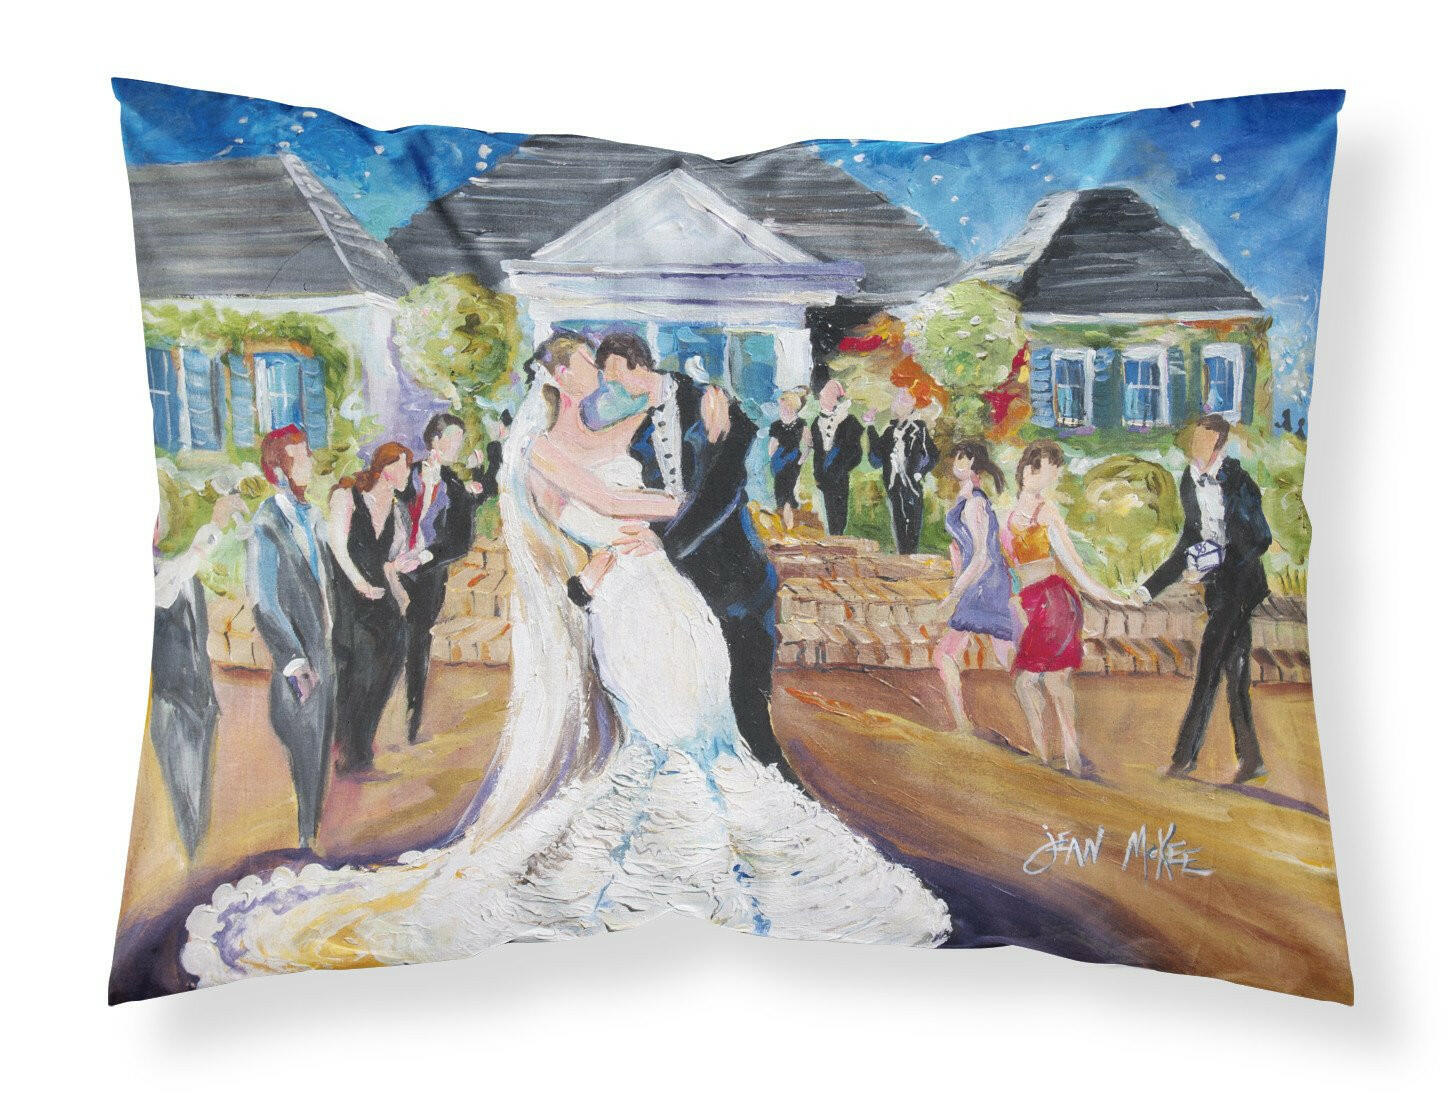 Our Wedding Day Fabric Standard Pillowcase JMK1127PILLOWCASE by Caroline's Treasures